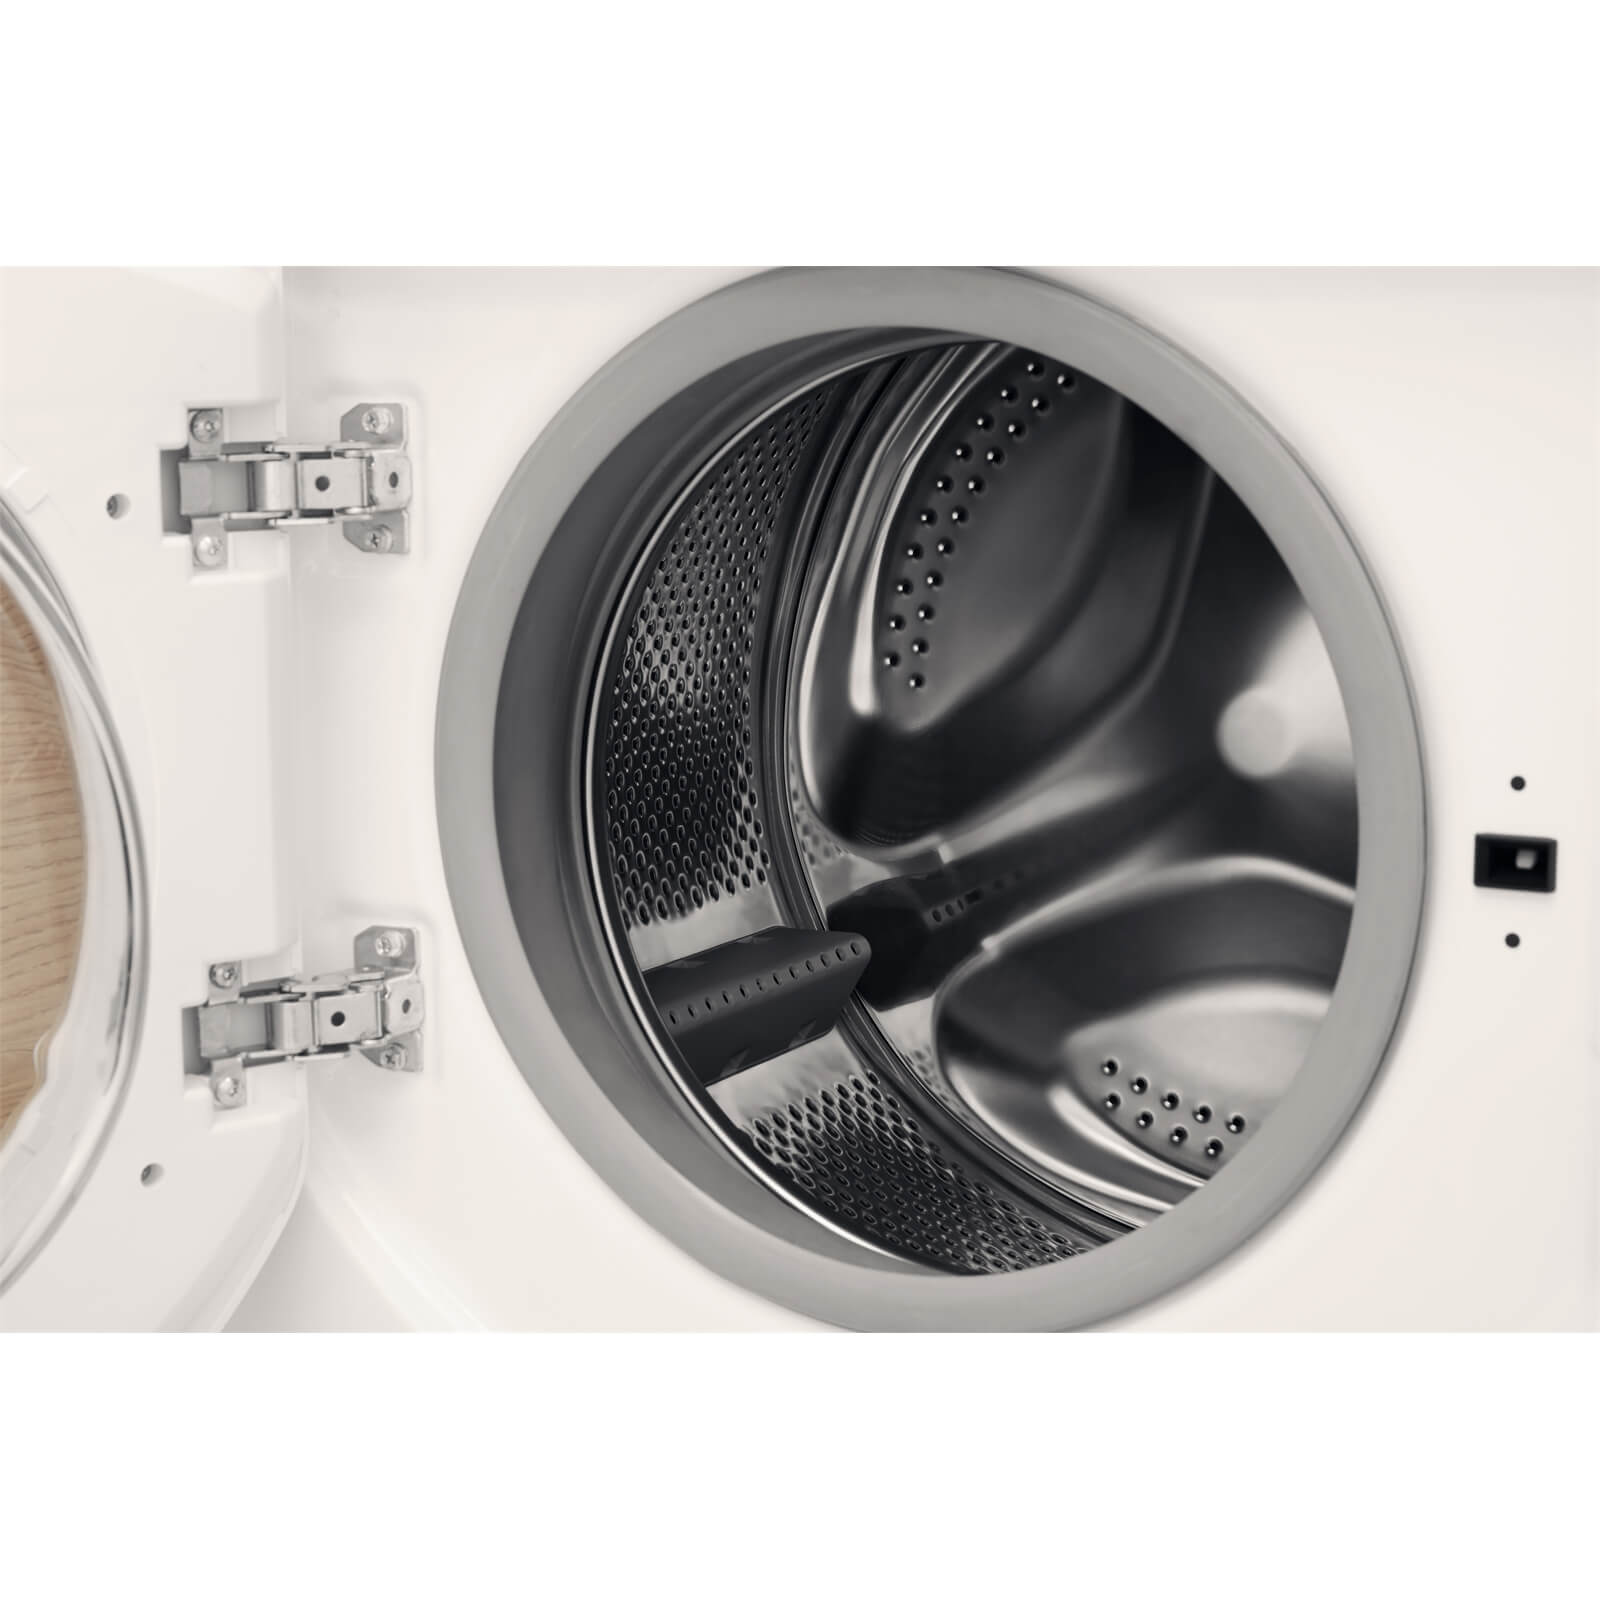 Hotpoint BIWDHL7128 Integrated Washer Dryer